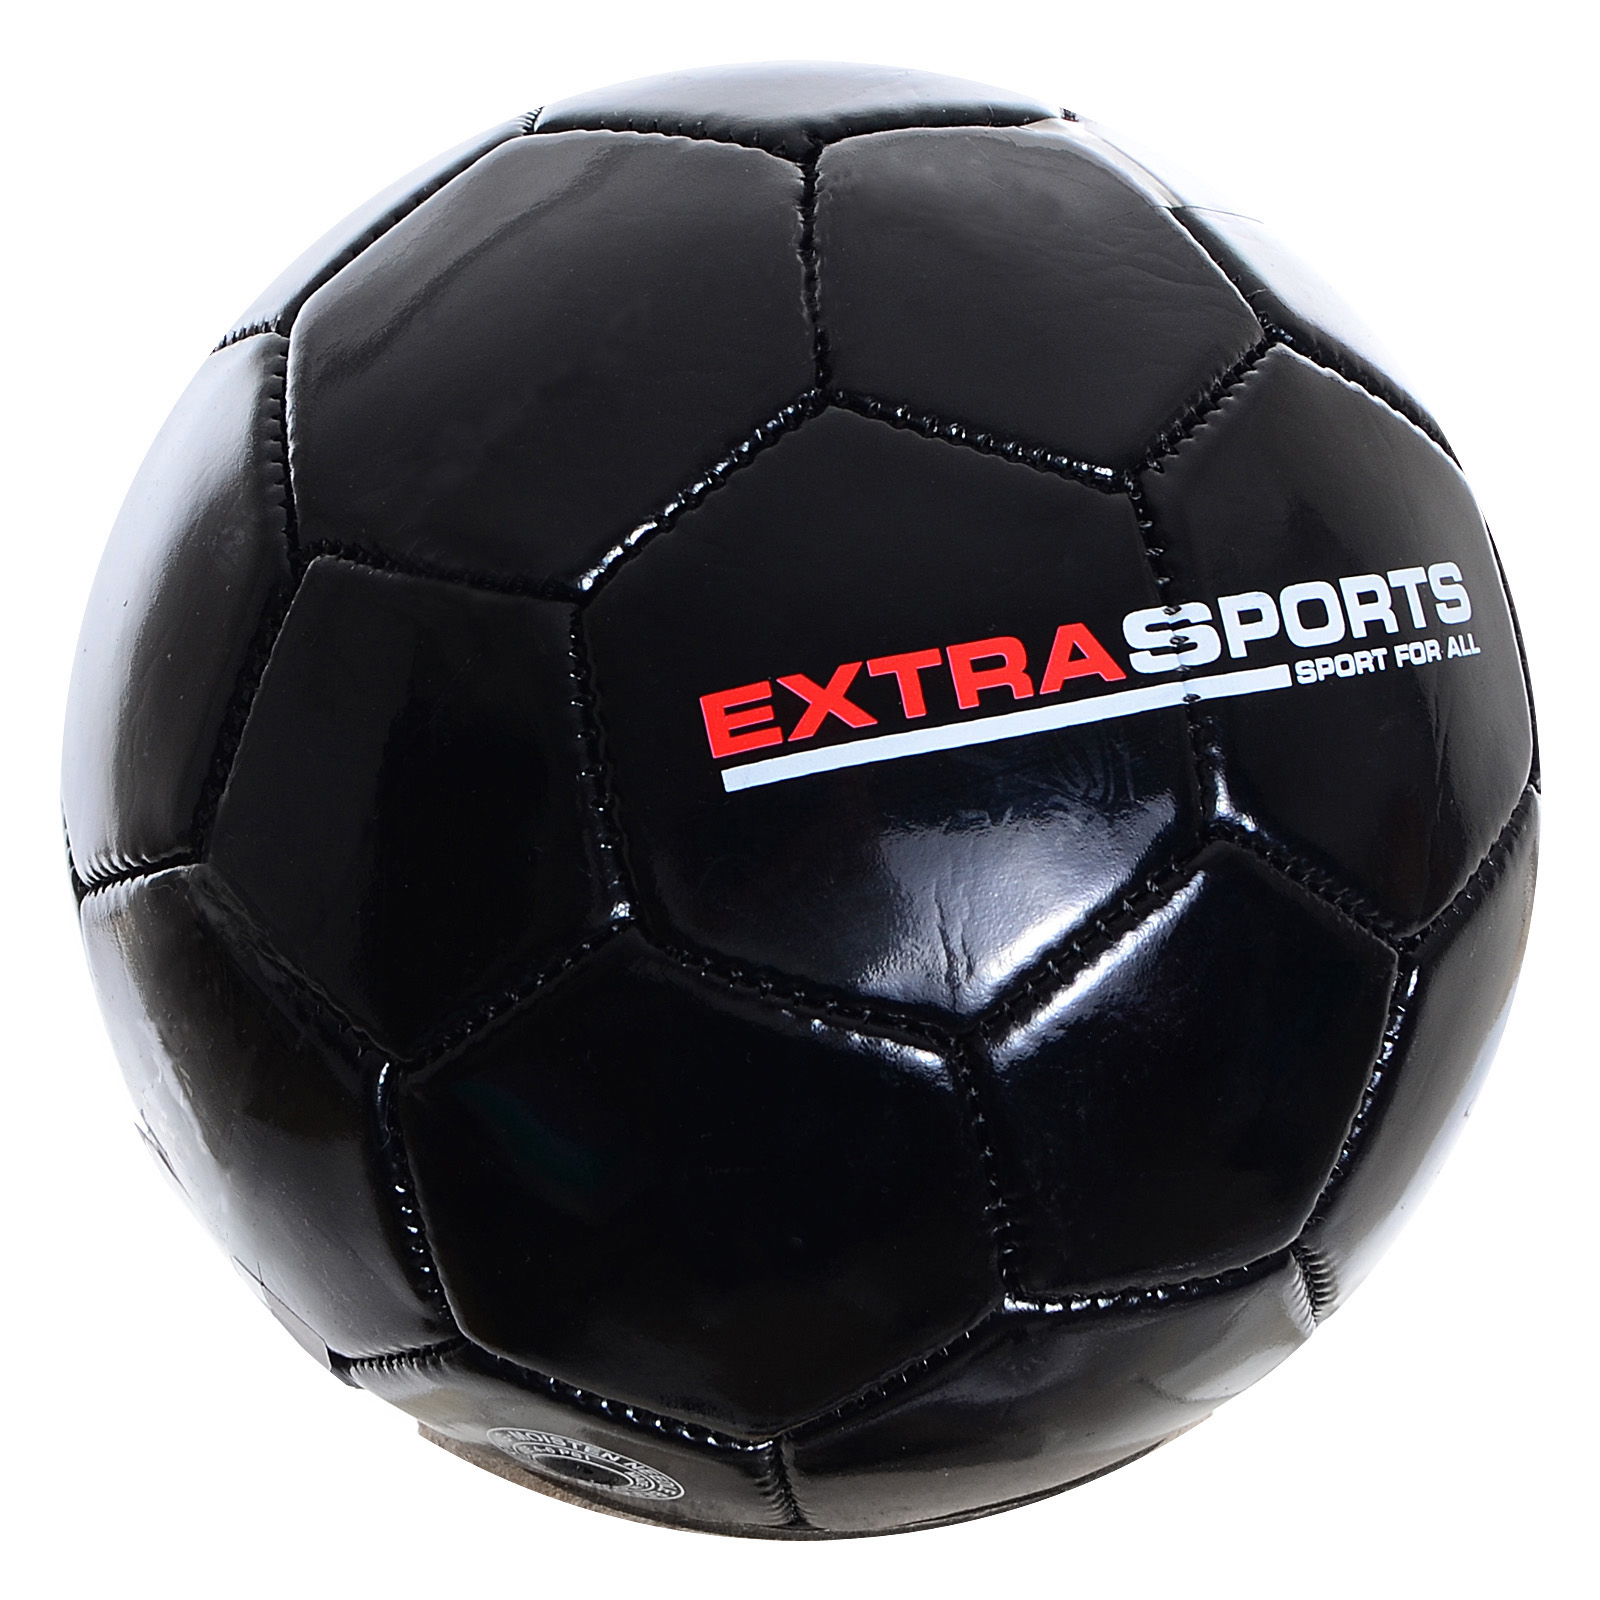 Extra Sports EXTRA SPORT FOOTBALL BLACK 2 